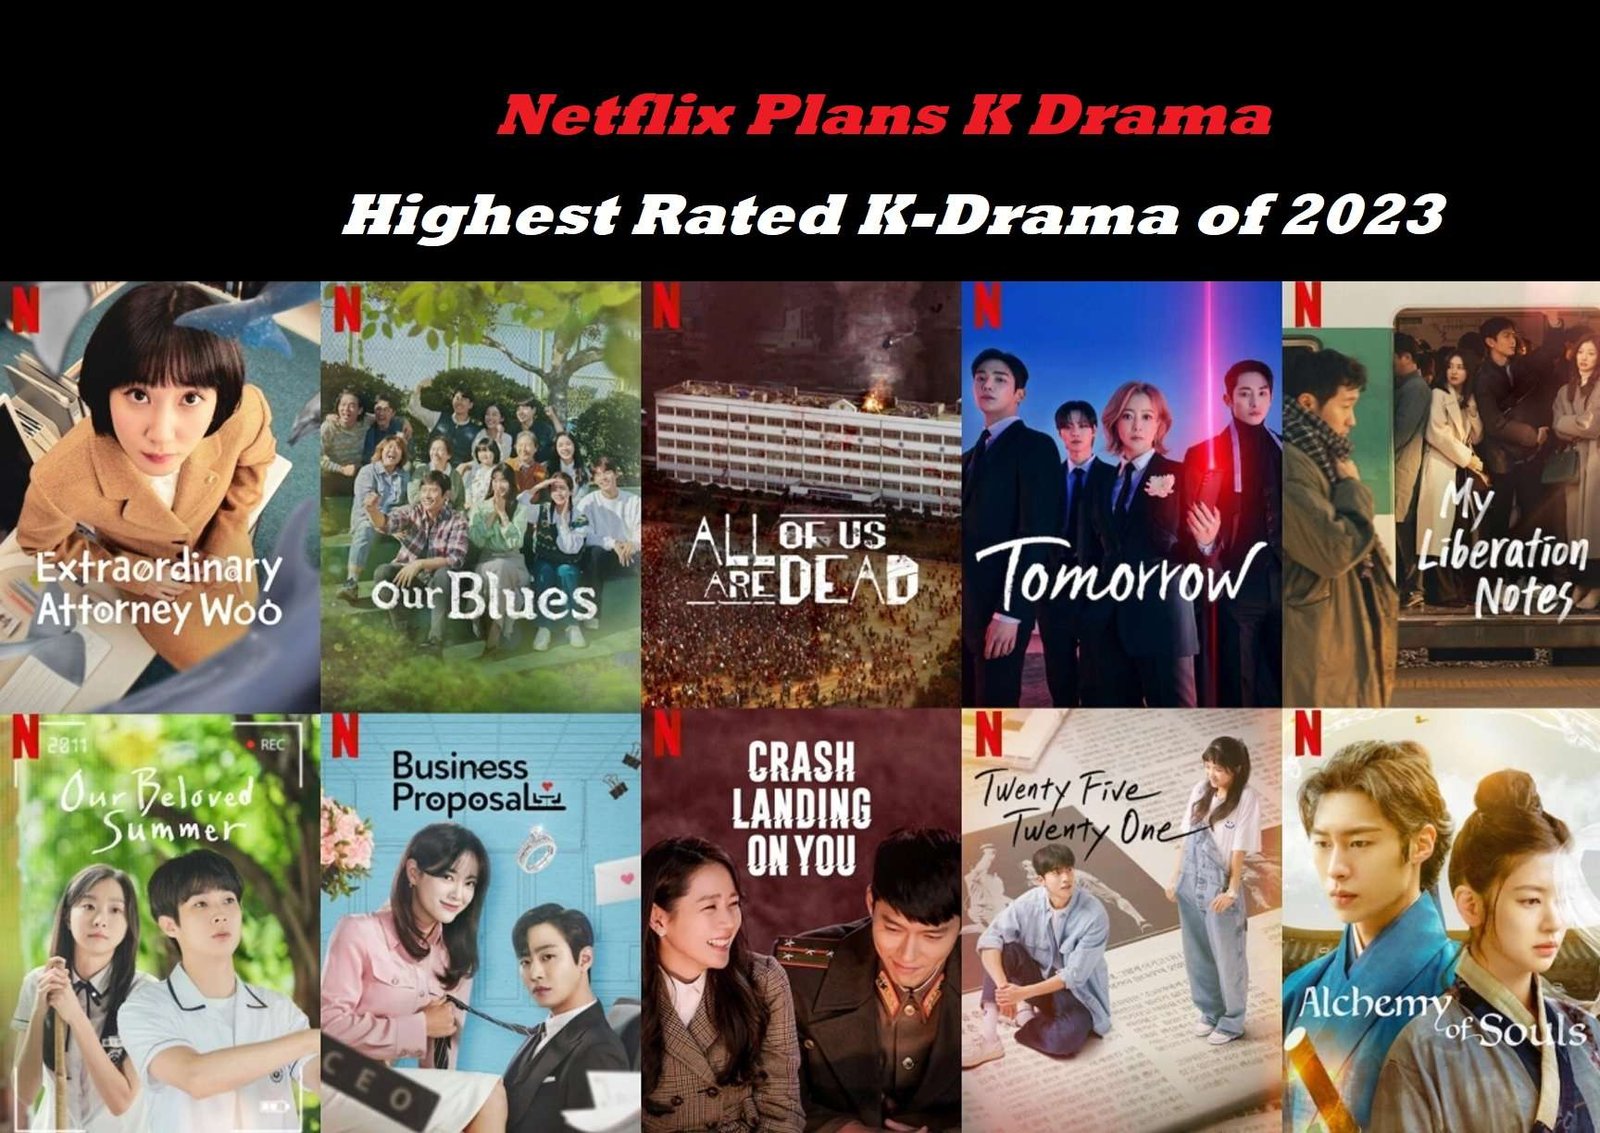 Top 4 Korean Dramas to Watch on Netflix in 2023 Netflix Plans